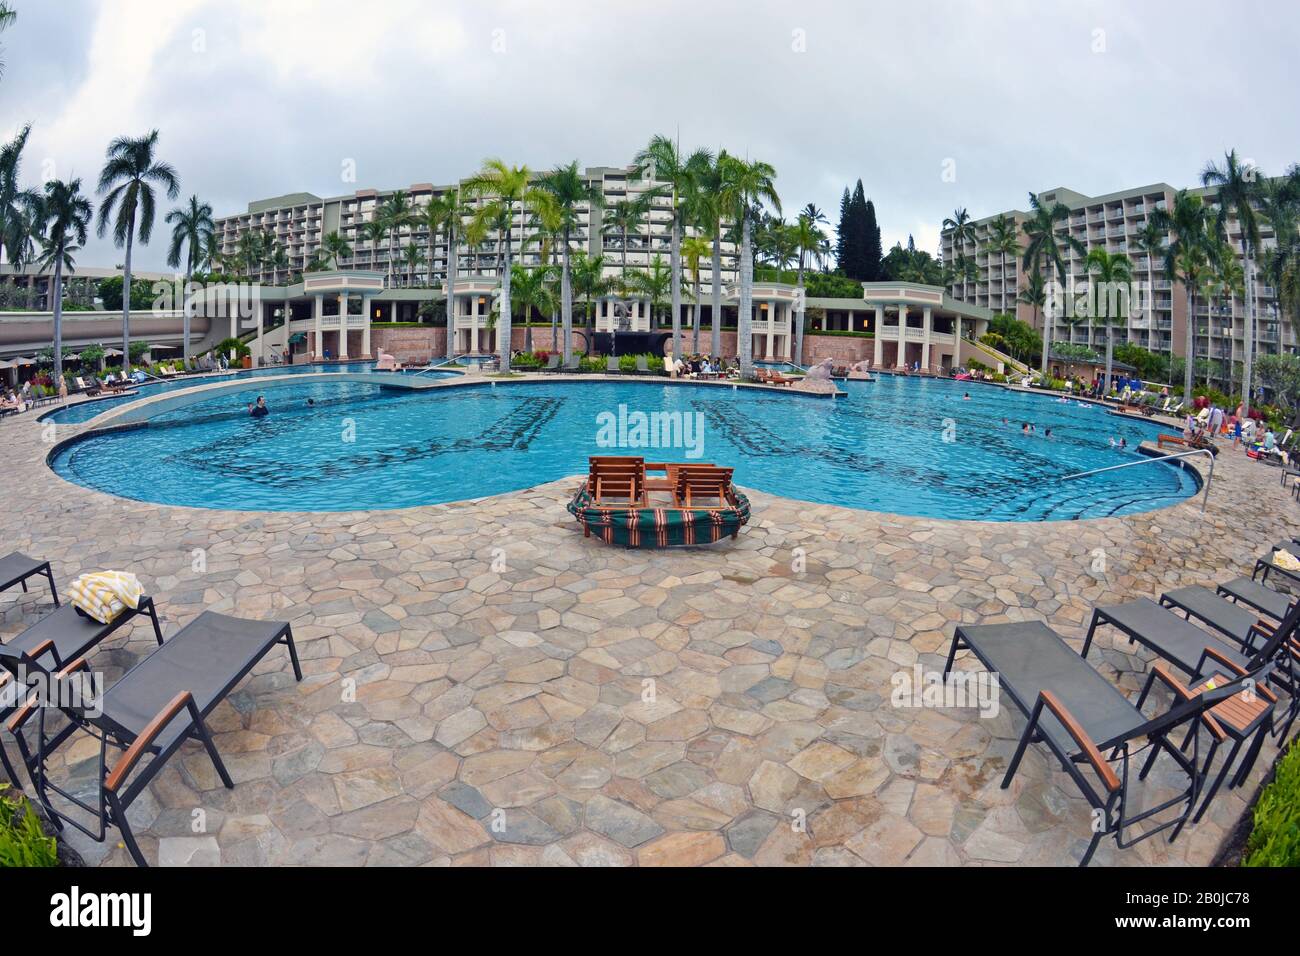 Pool area of a tropical resort in Kauai, Hawaii, USA Stock Photo